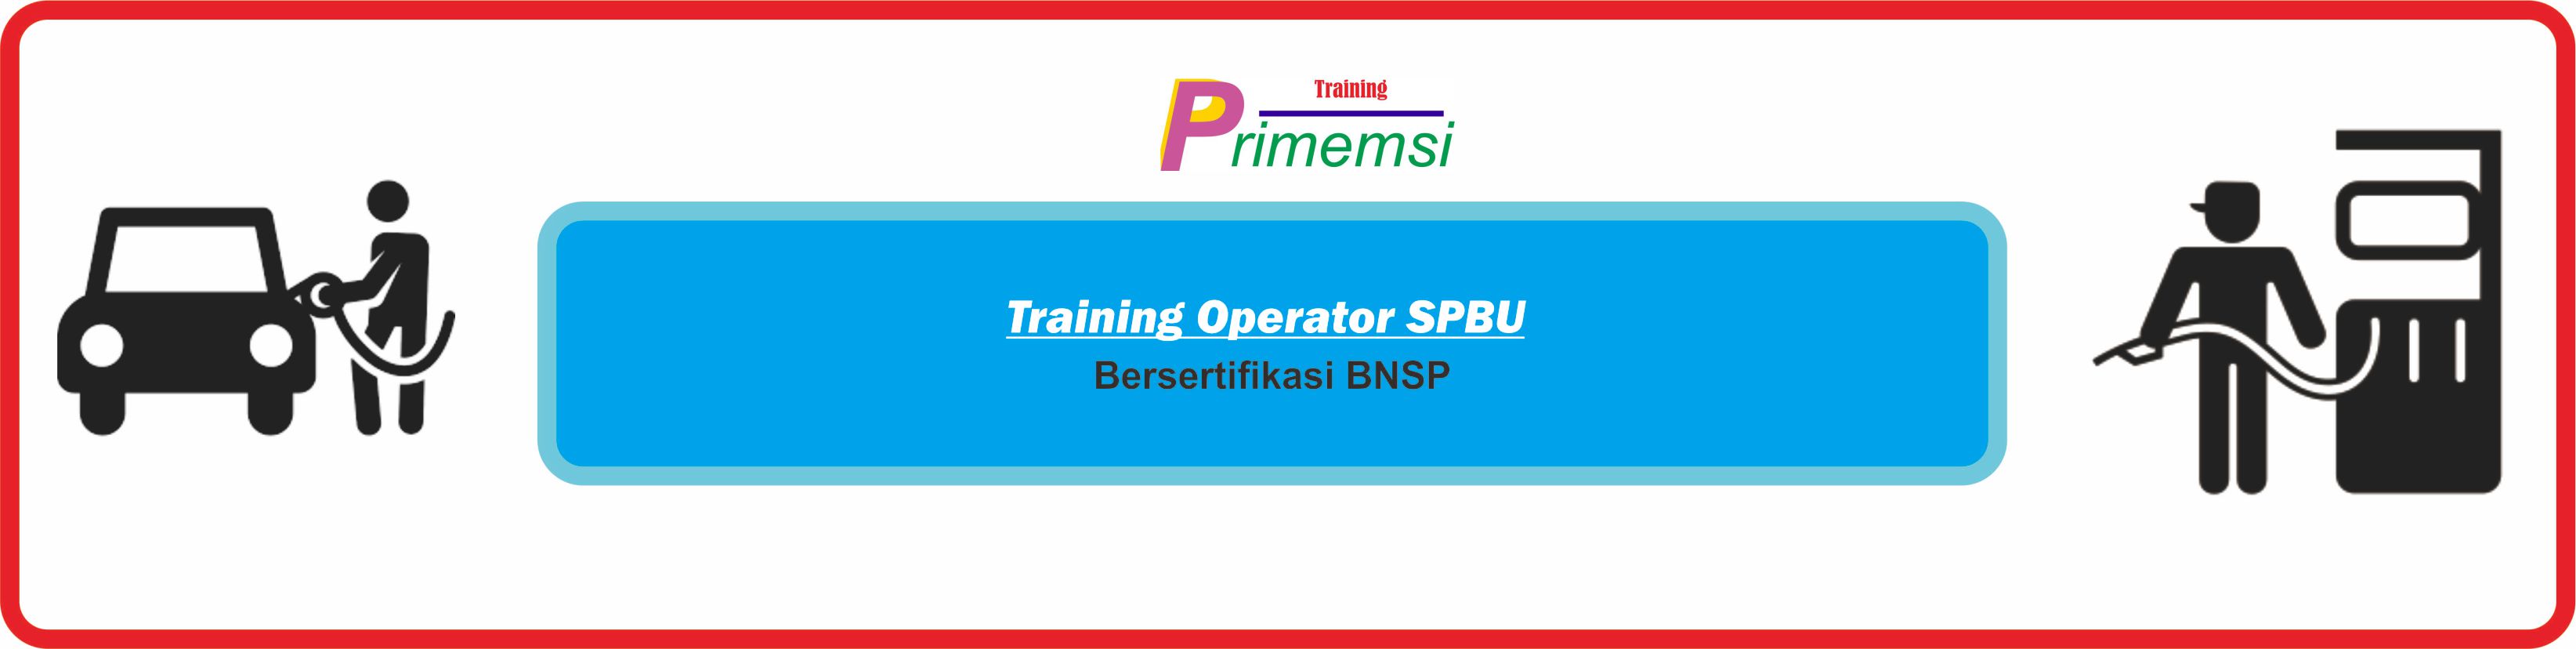 training operator spbu bersertifikasi bnsp